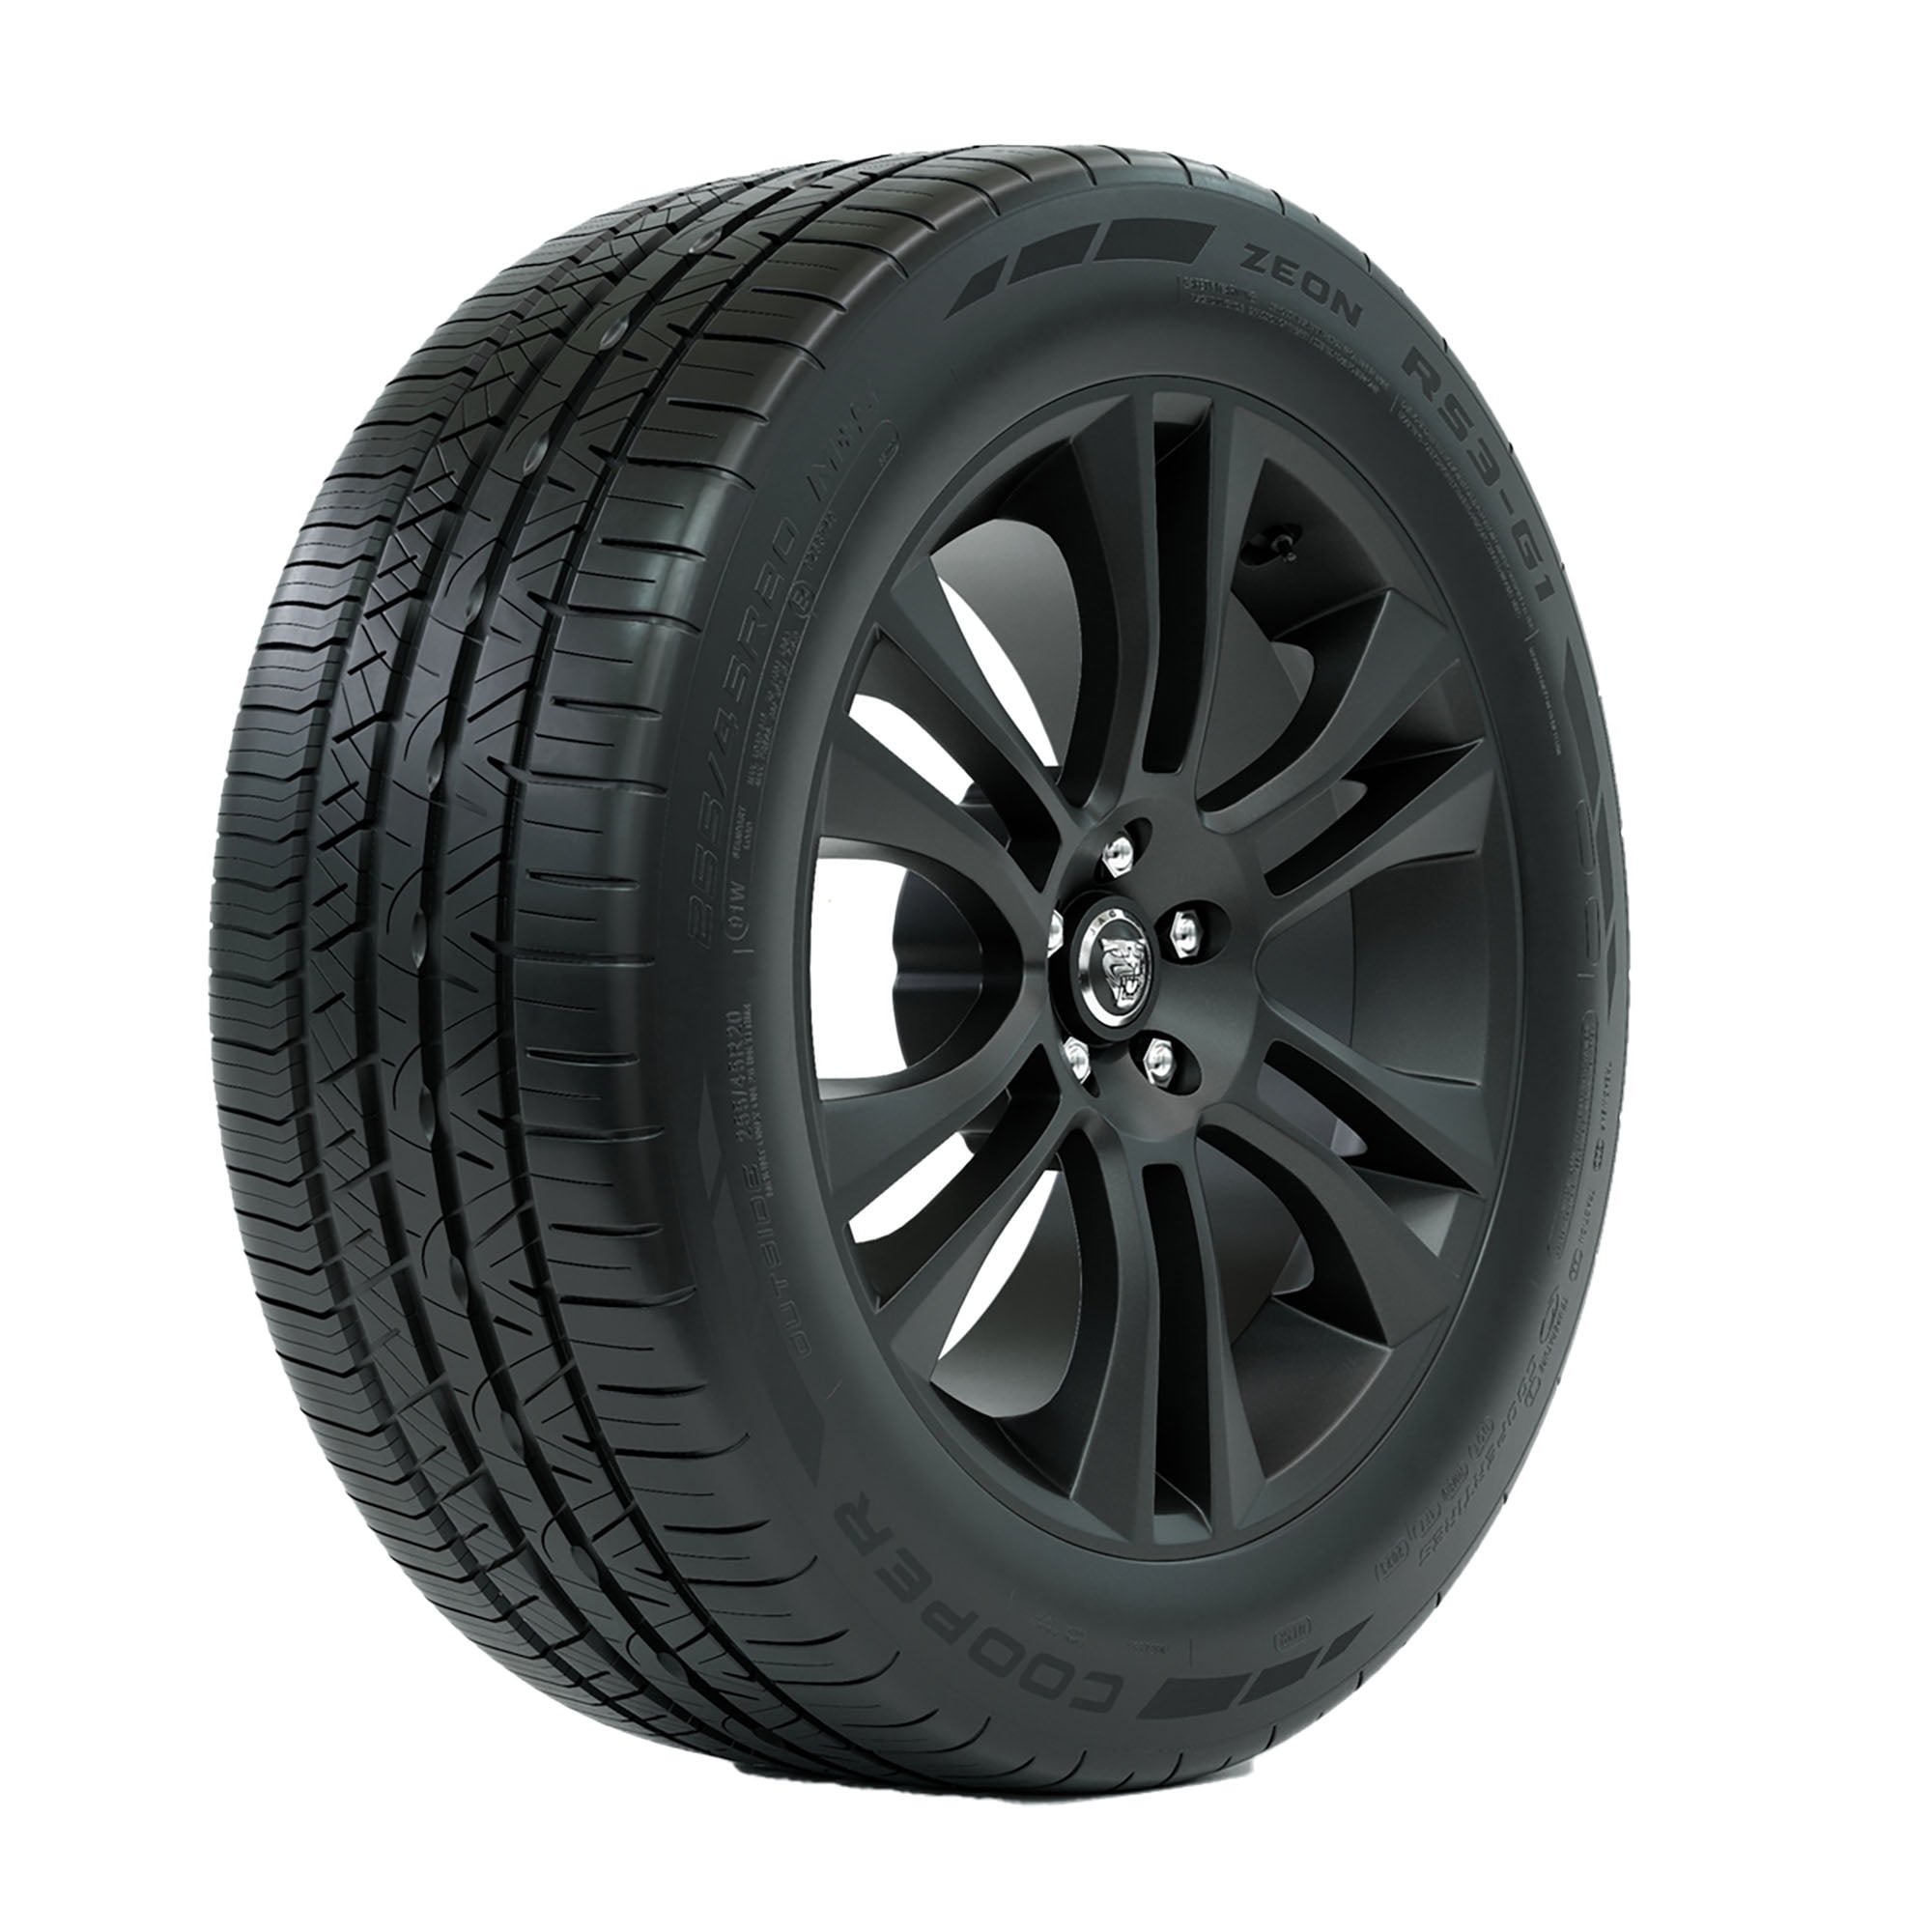 Cooper Zeon RS3-G1 All Season 255/45R18 103W XL Passenger Tire